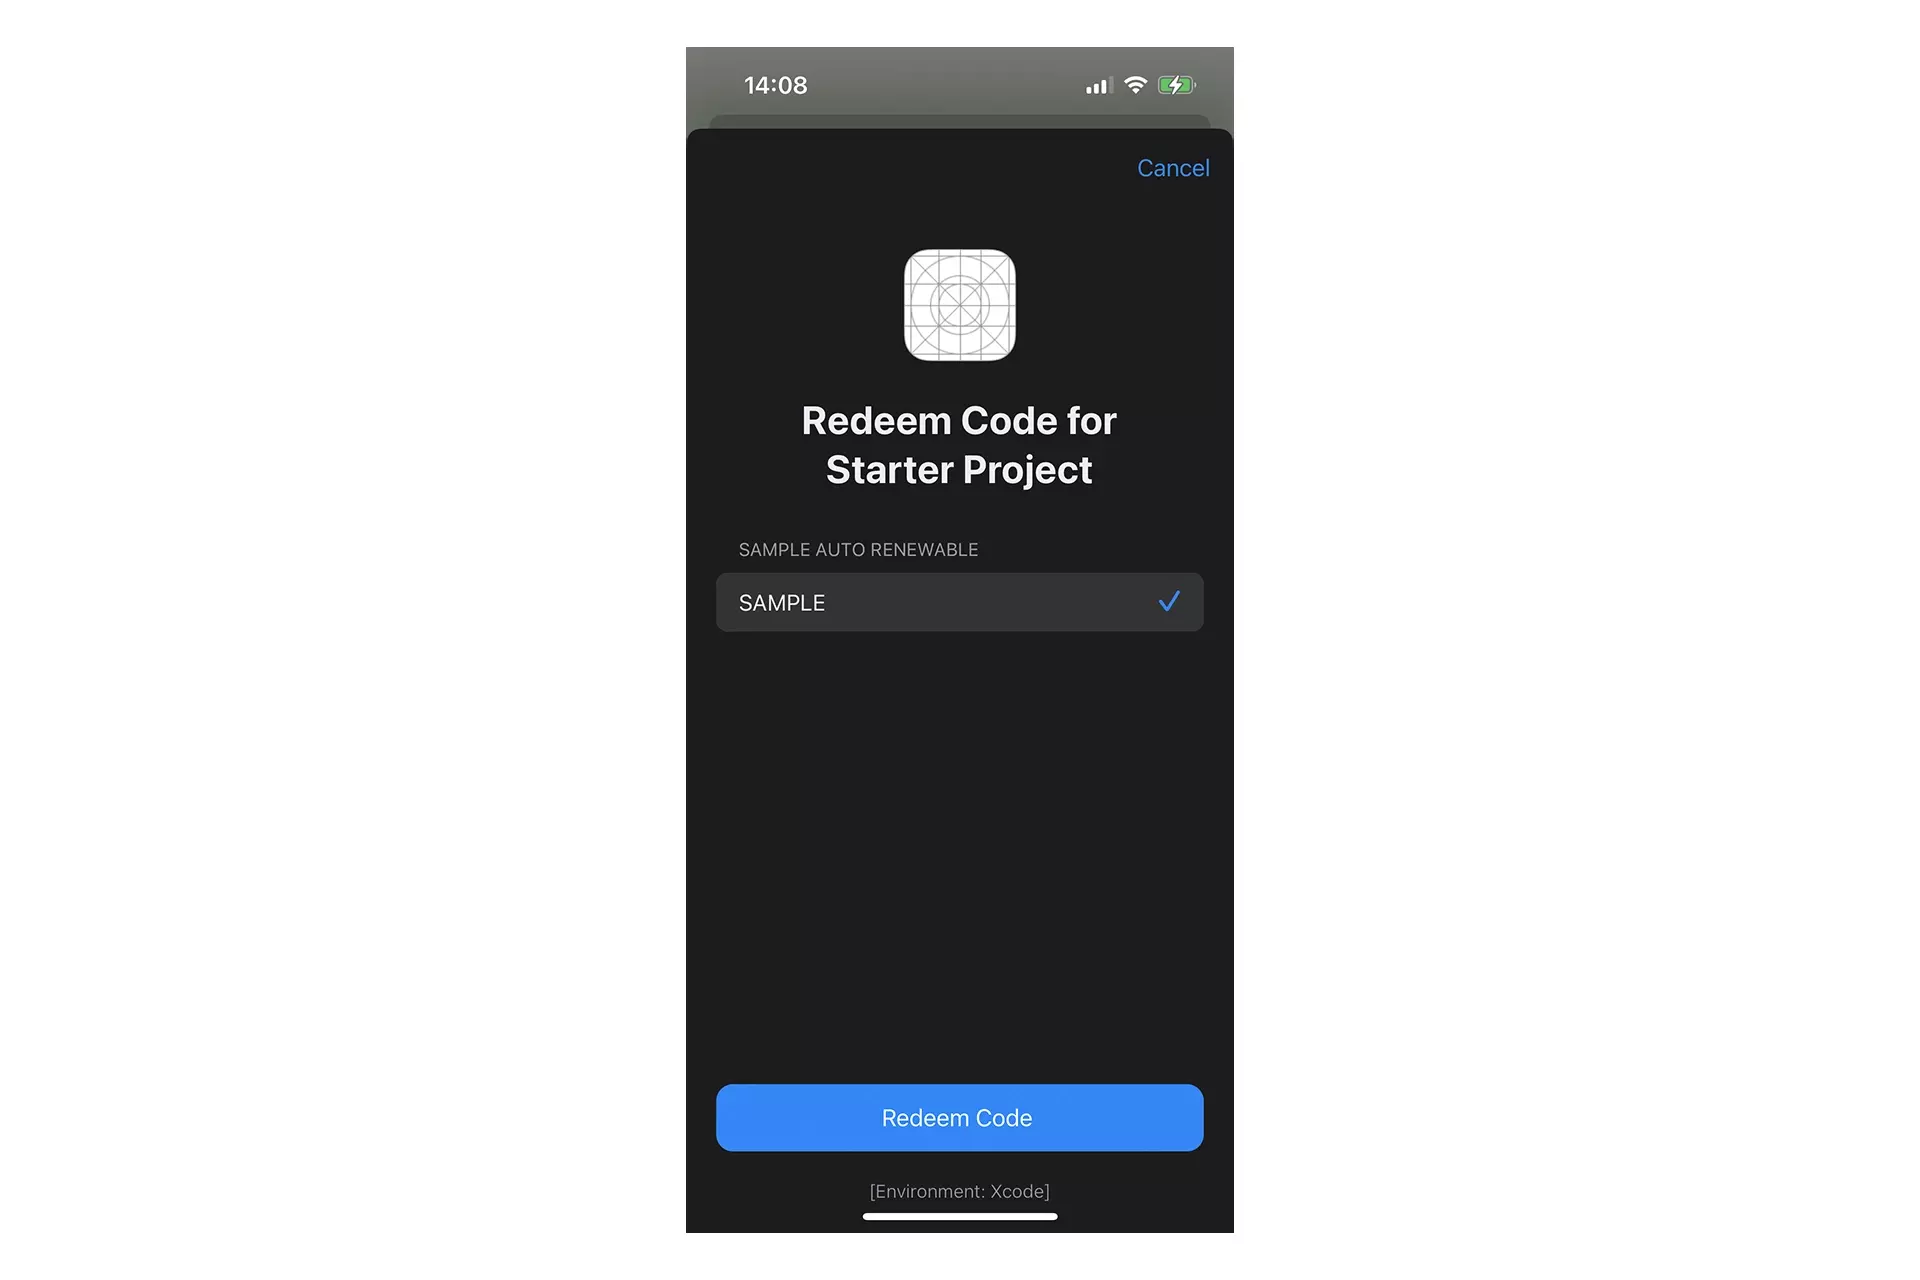 A screenshot of the Redeem Custom Offer Code screen in iOS.